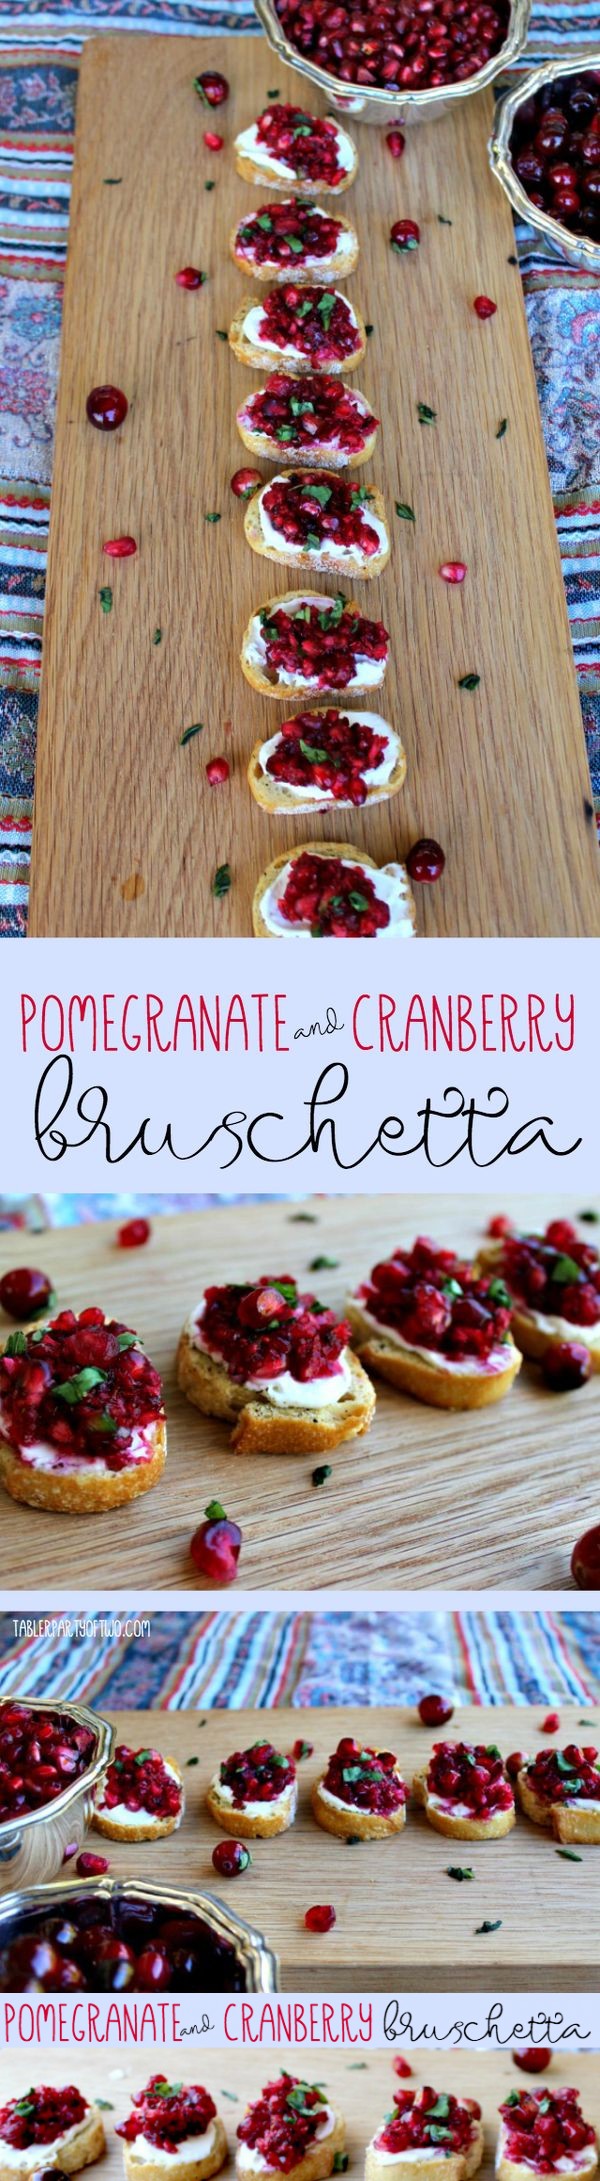 Pomegranate and Cranberry Bruschetta